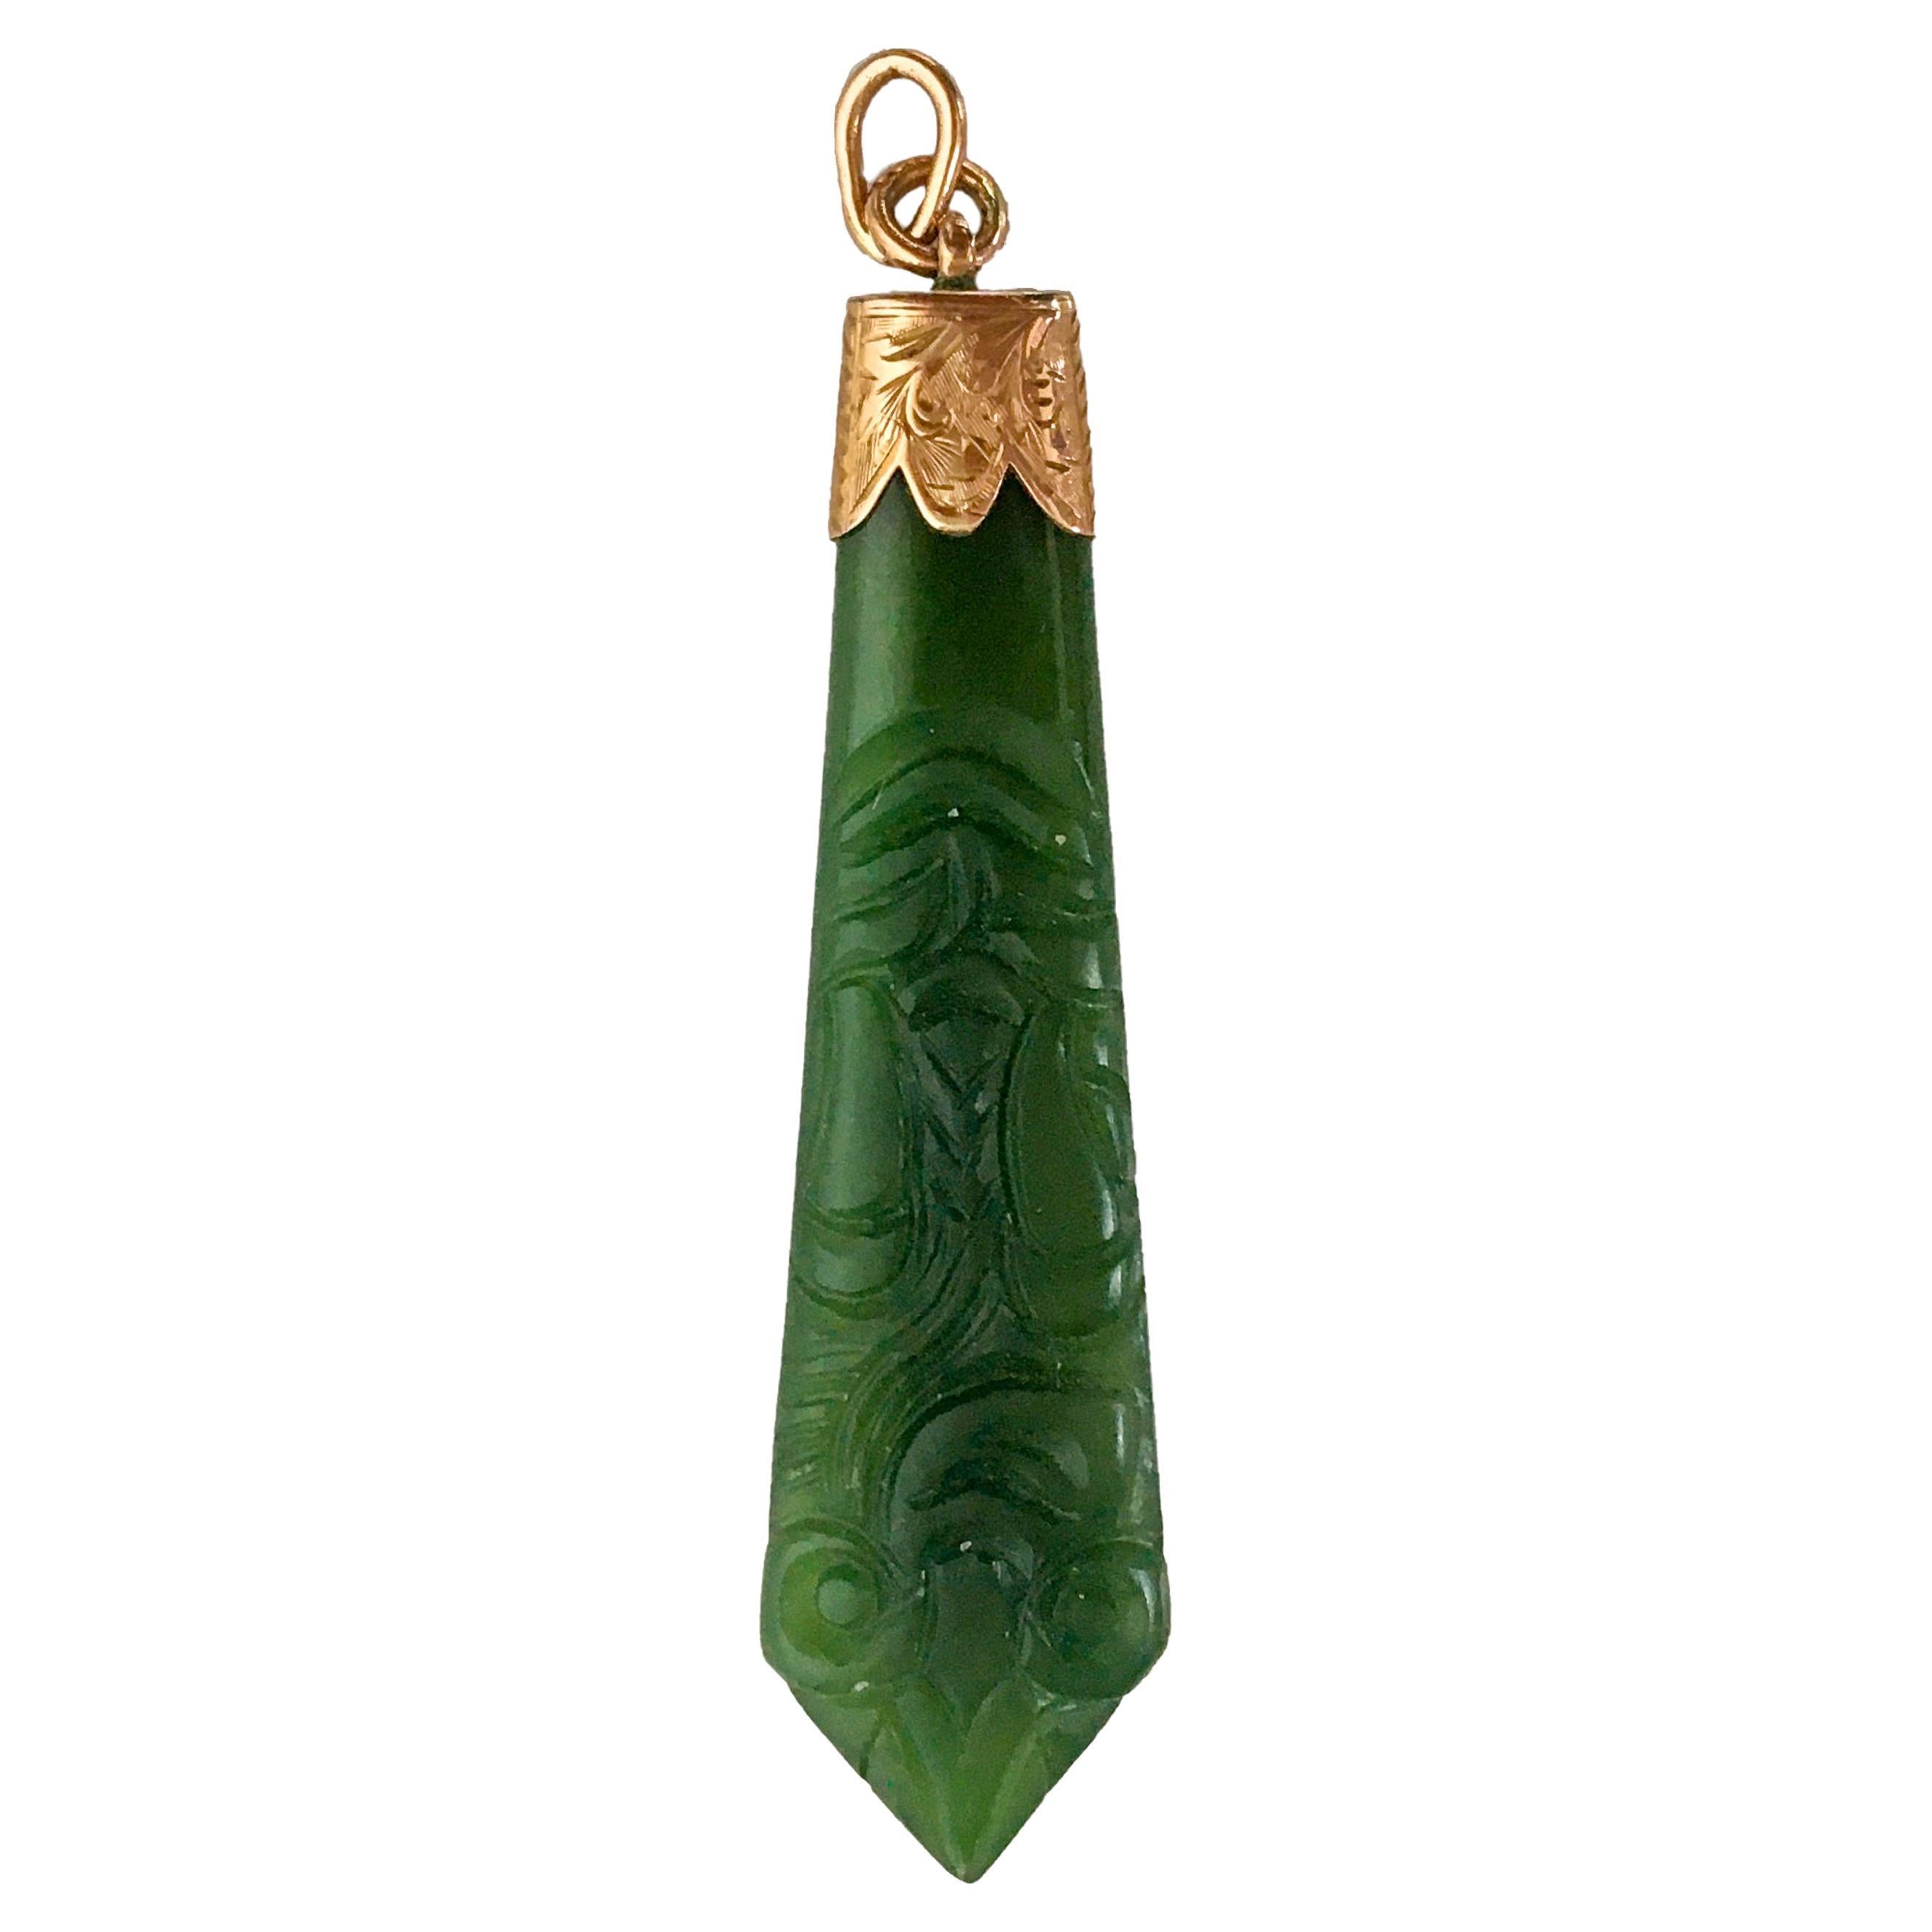 Carved Jade Kite Cut Rose Gold Pendant